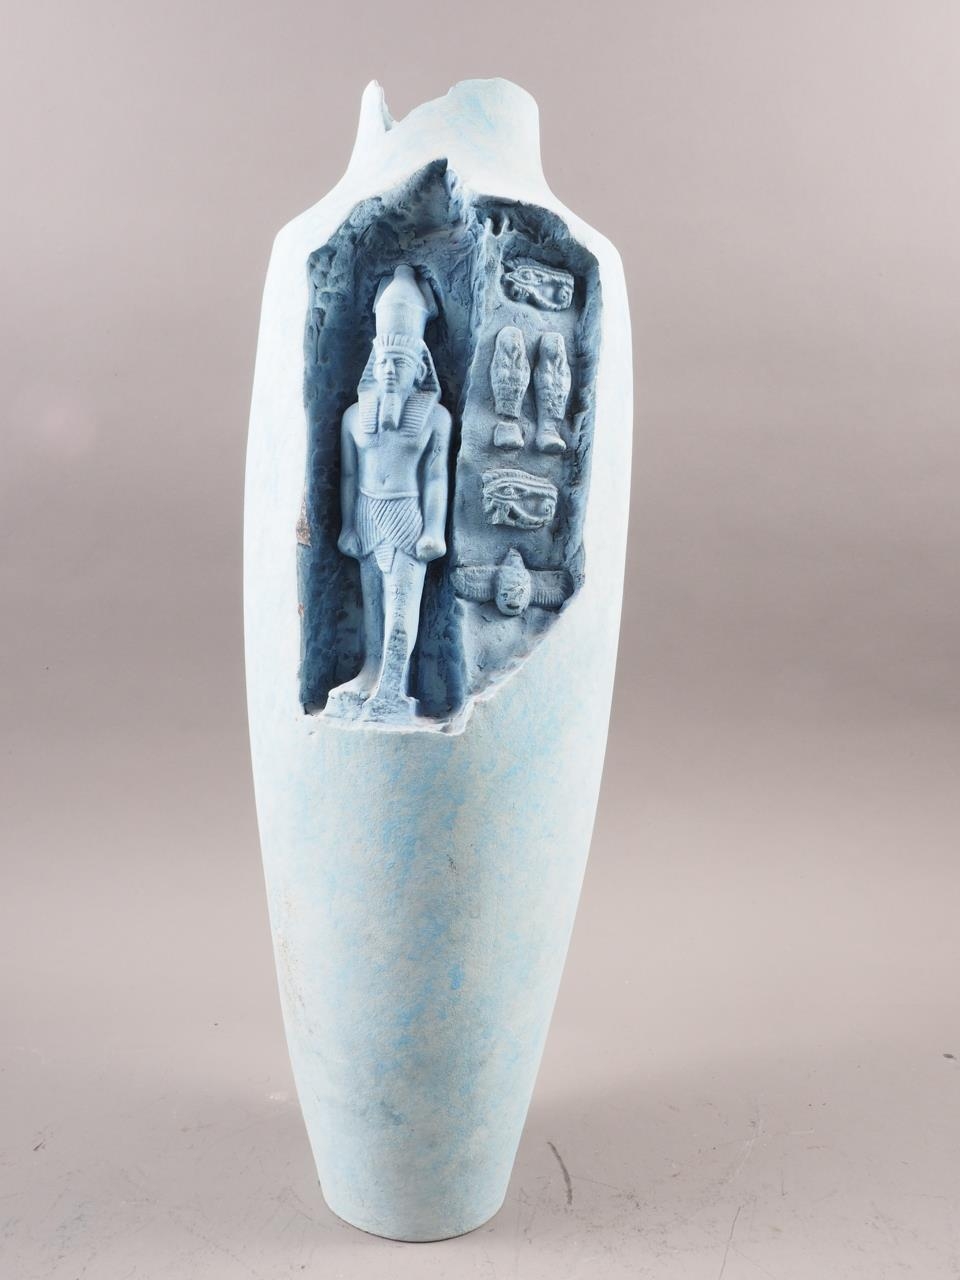 A modern Egyptian mania sculptural vase with Abu symbol figure, 17 1/4" high